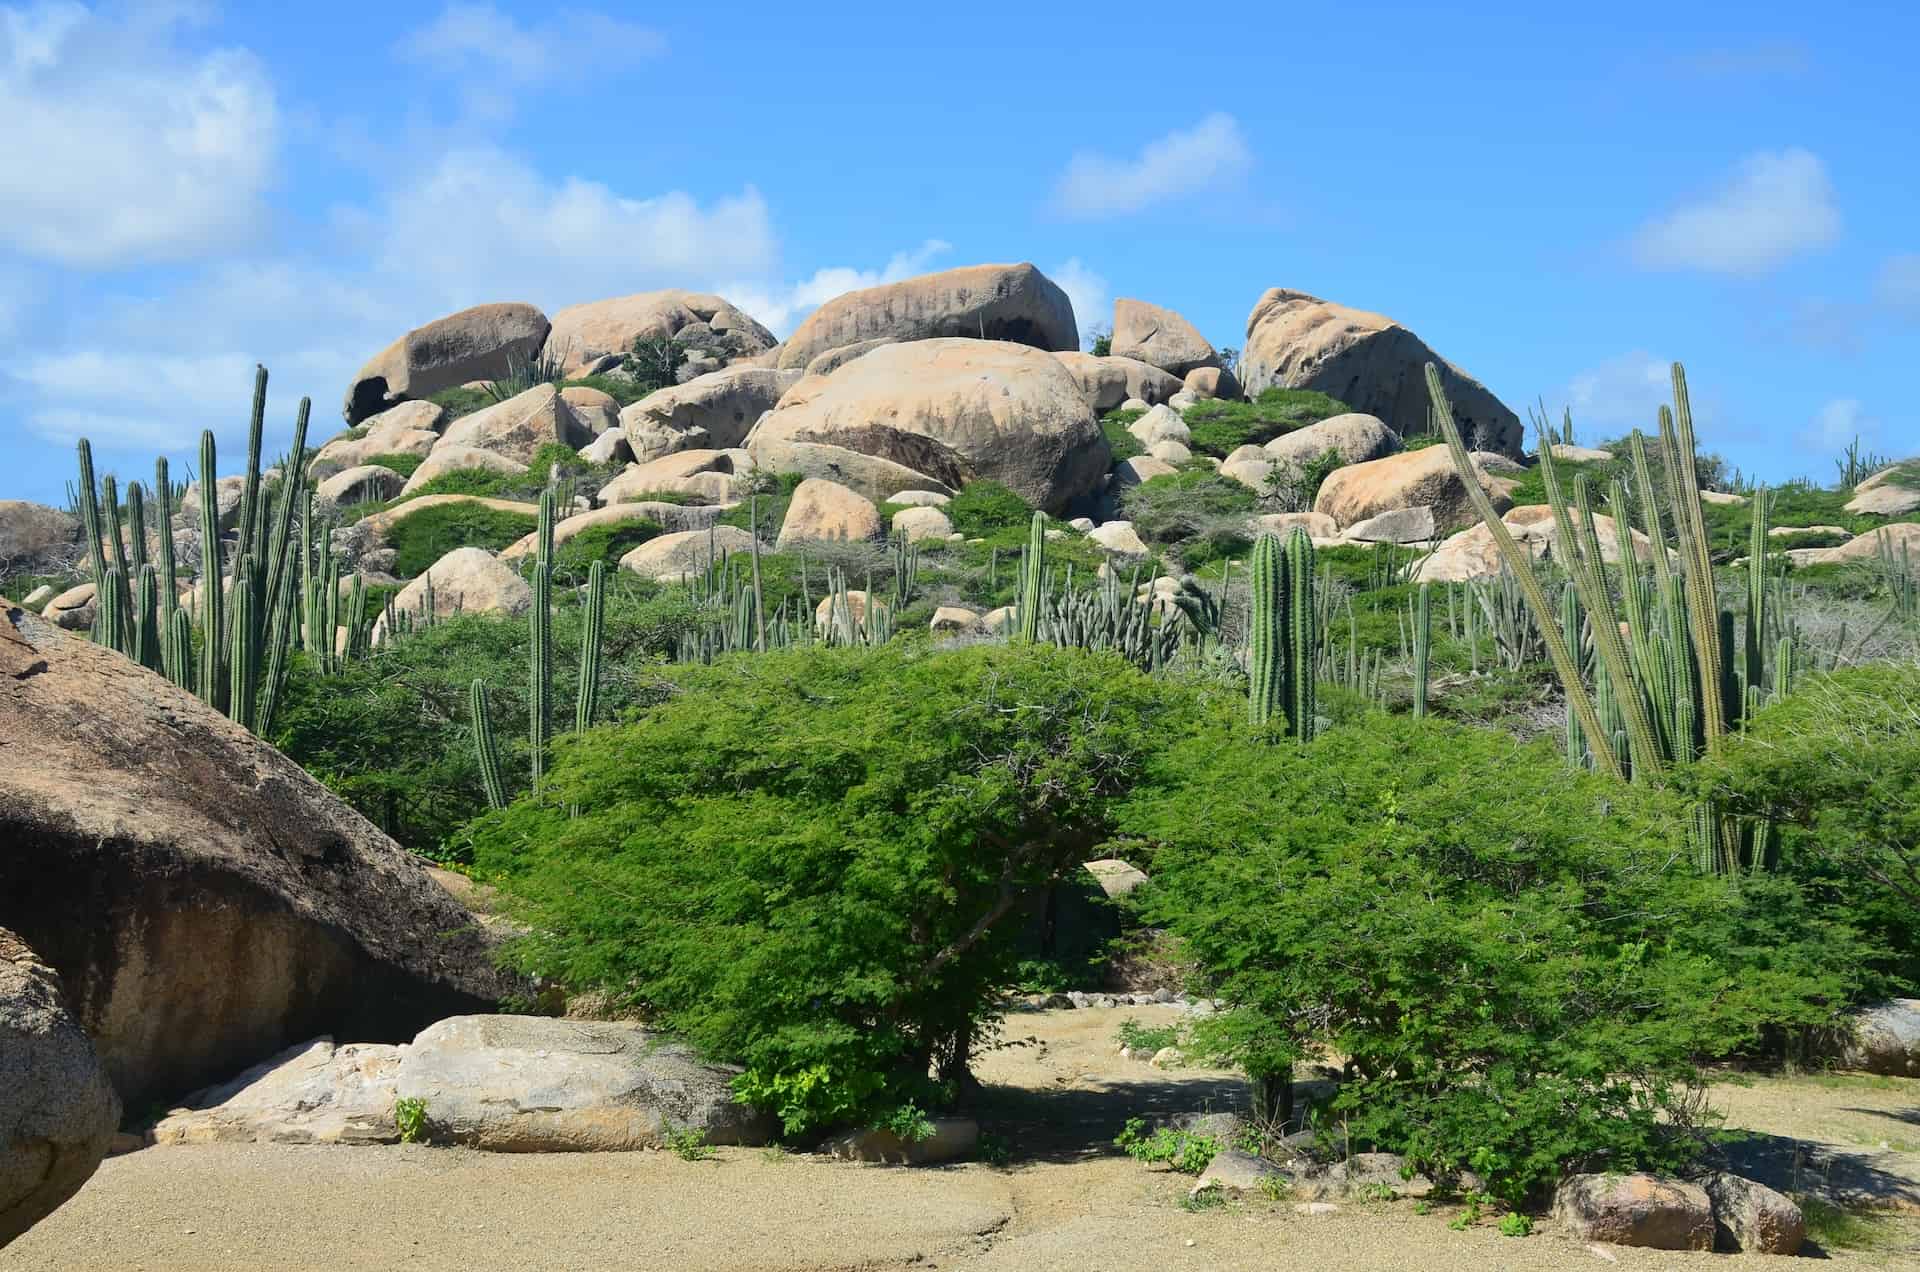 Ayo Rock Formations in Paradera, Aruba